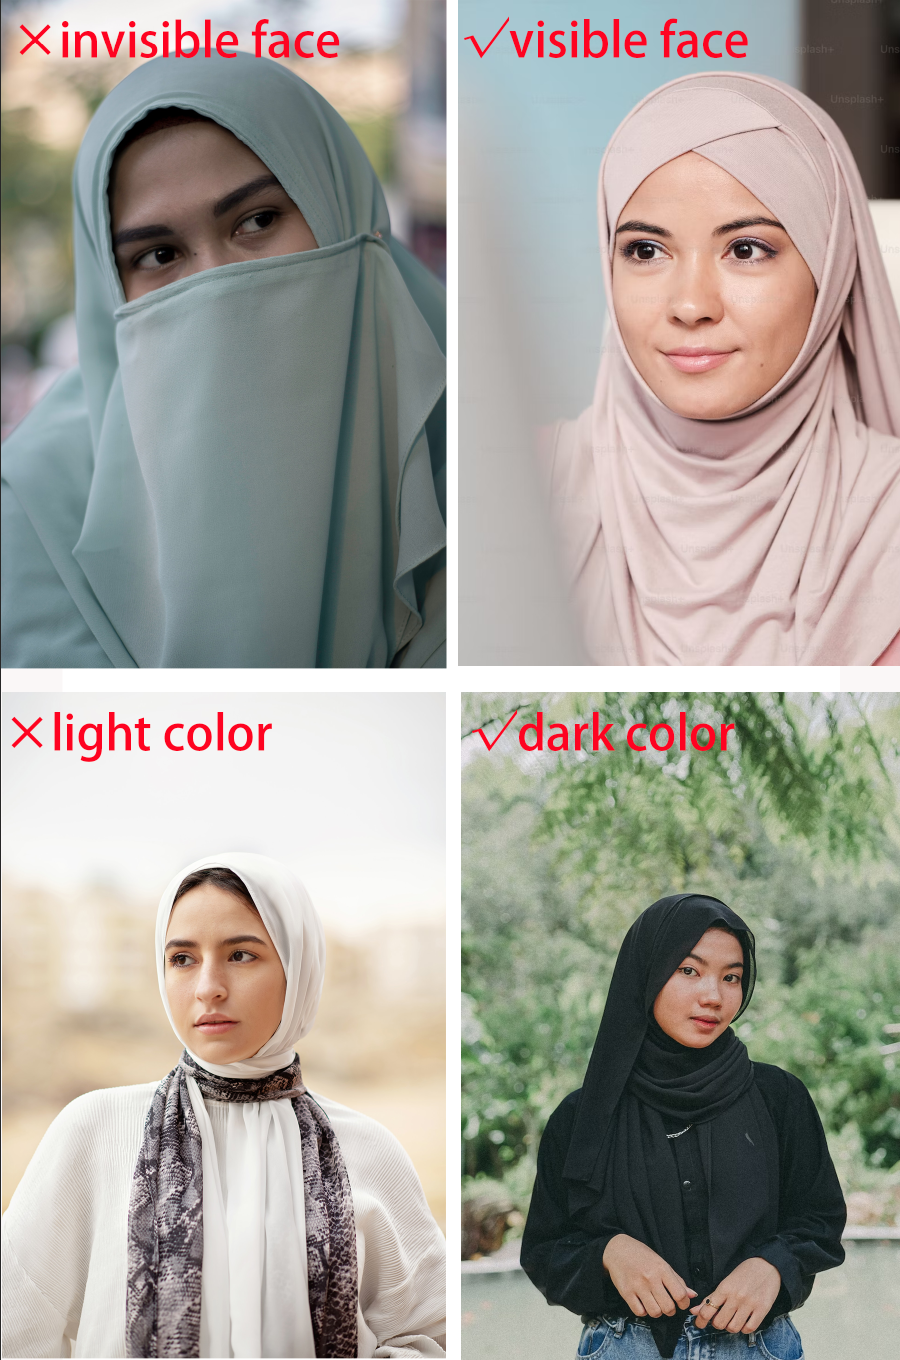 Malaysia passport photo dressing code for religious women